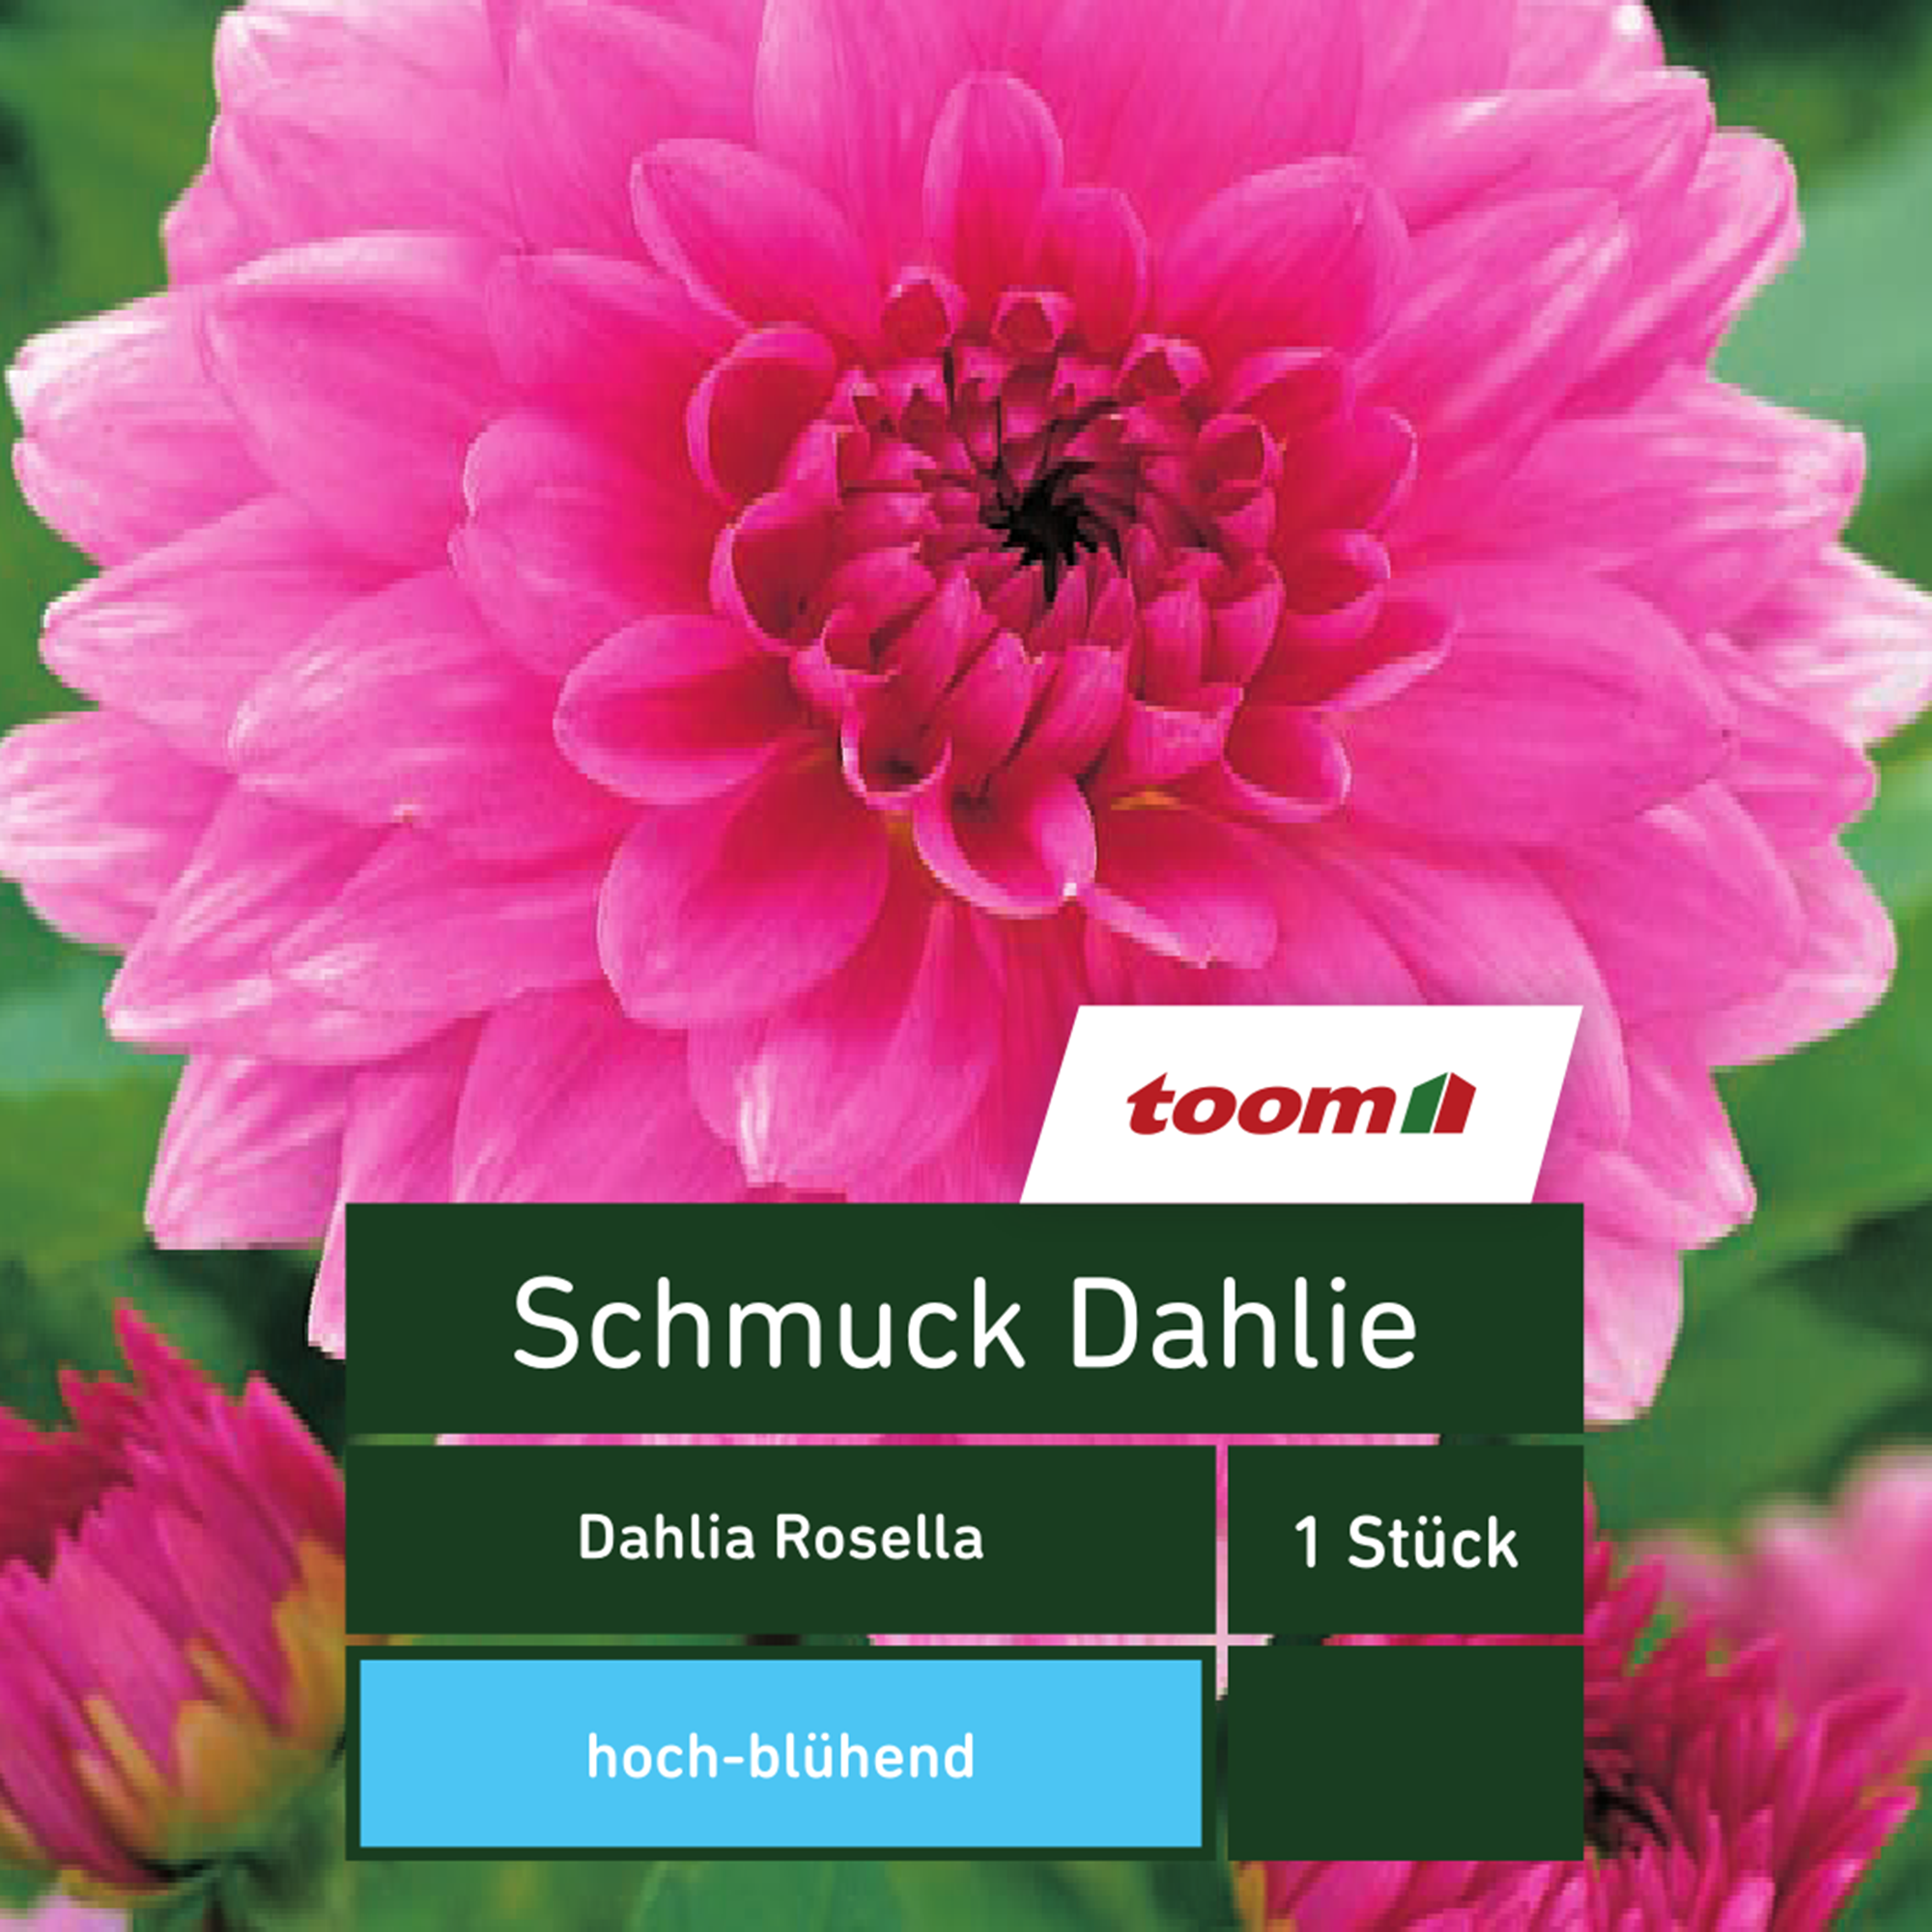 Schmuck-Dahlie 'Dahlia Rosella', 1 Stück, rosa + product picture